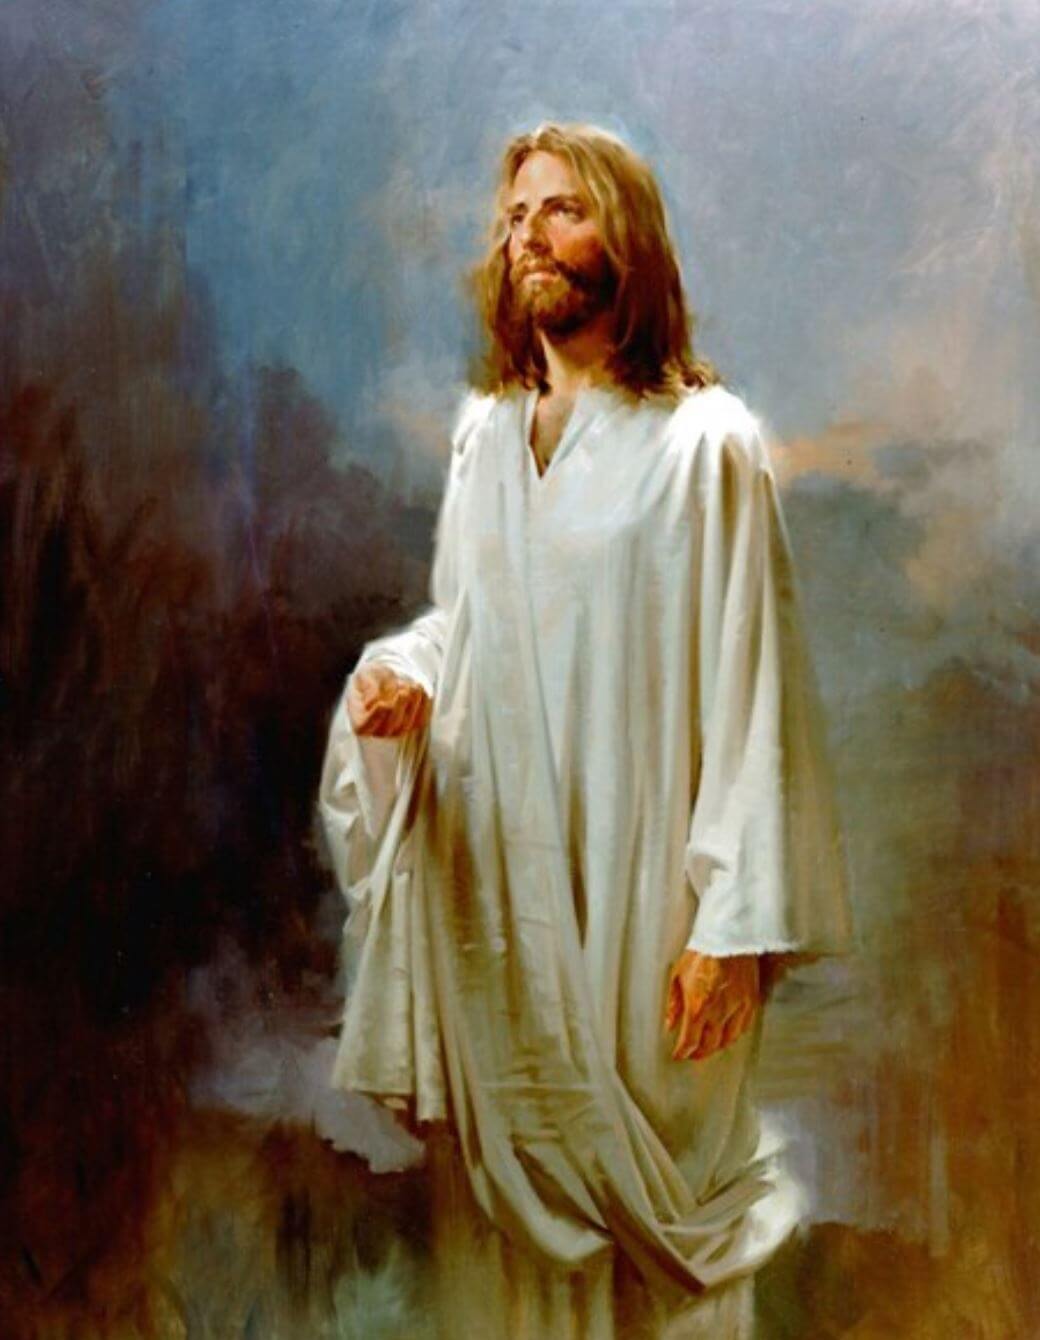 Jesus Christ Paintings for Sale Singapore Christian Oil Paintings UK